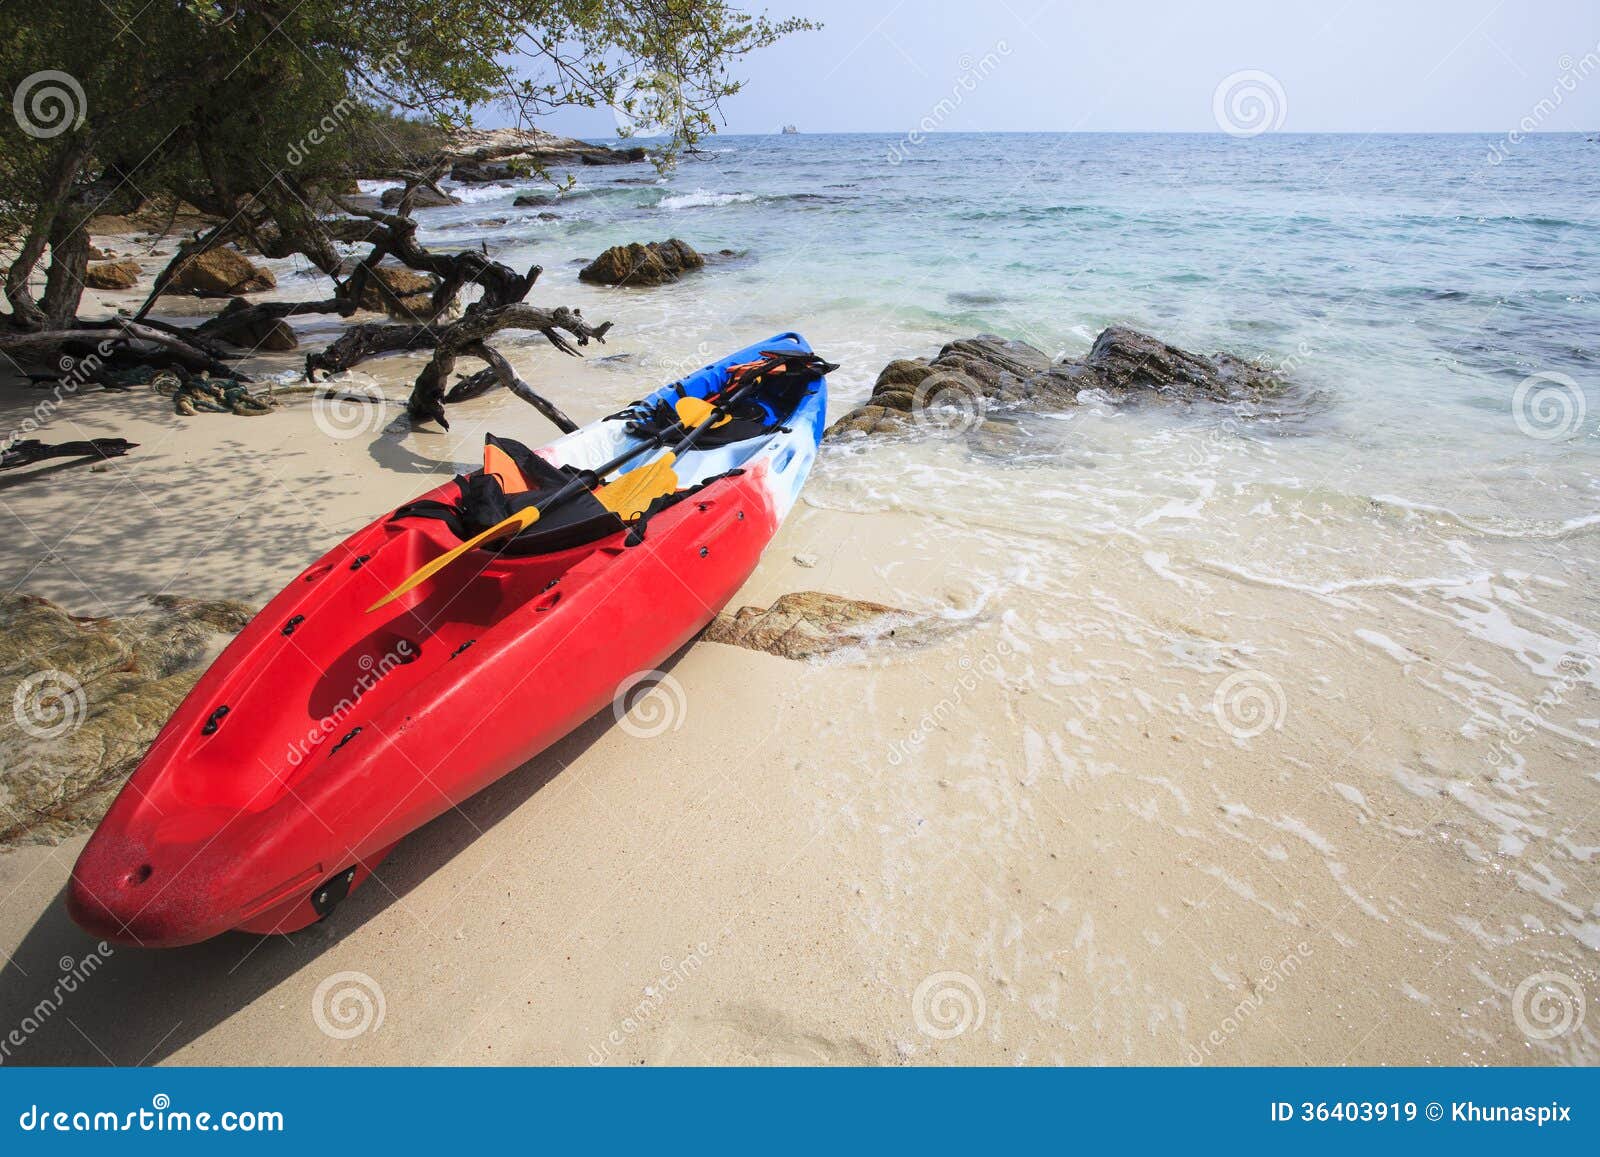 Sea Kayak Canoe On Sea Sand Beach With Beautiful Nature ...